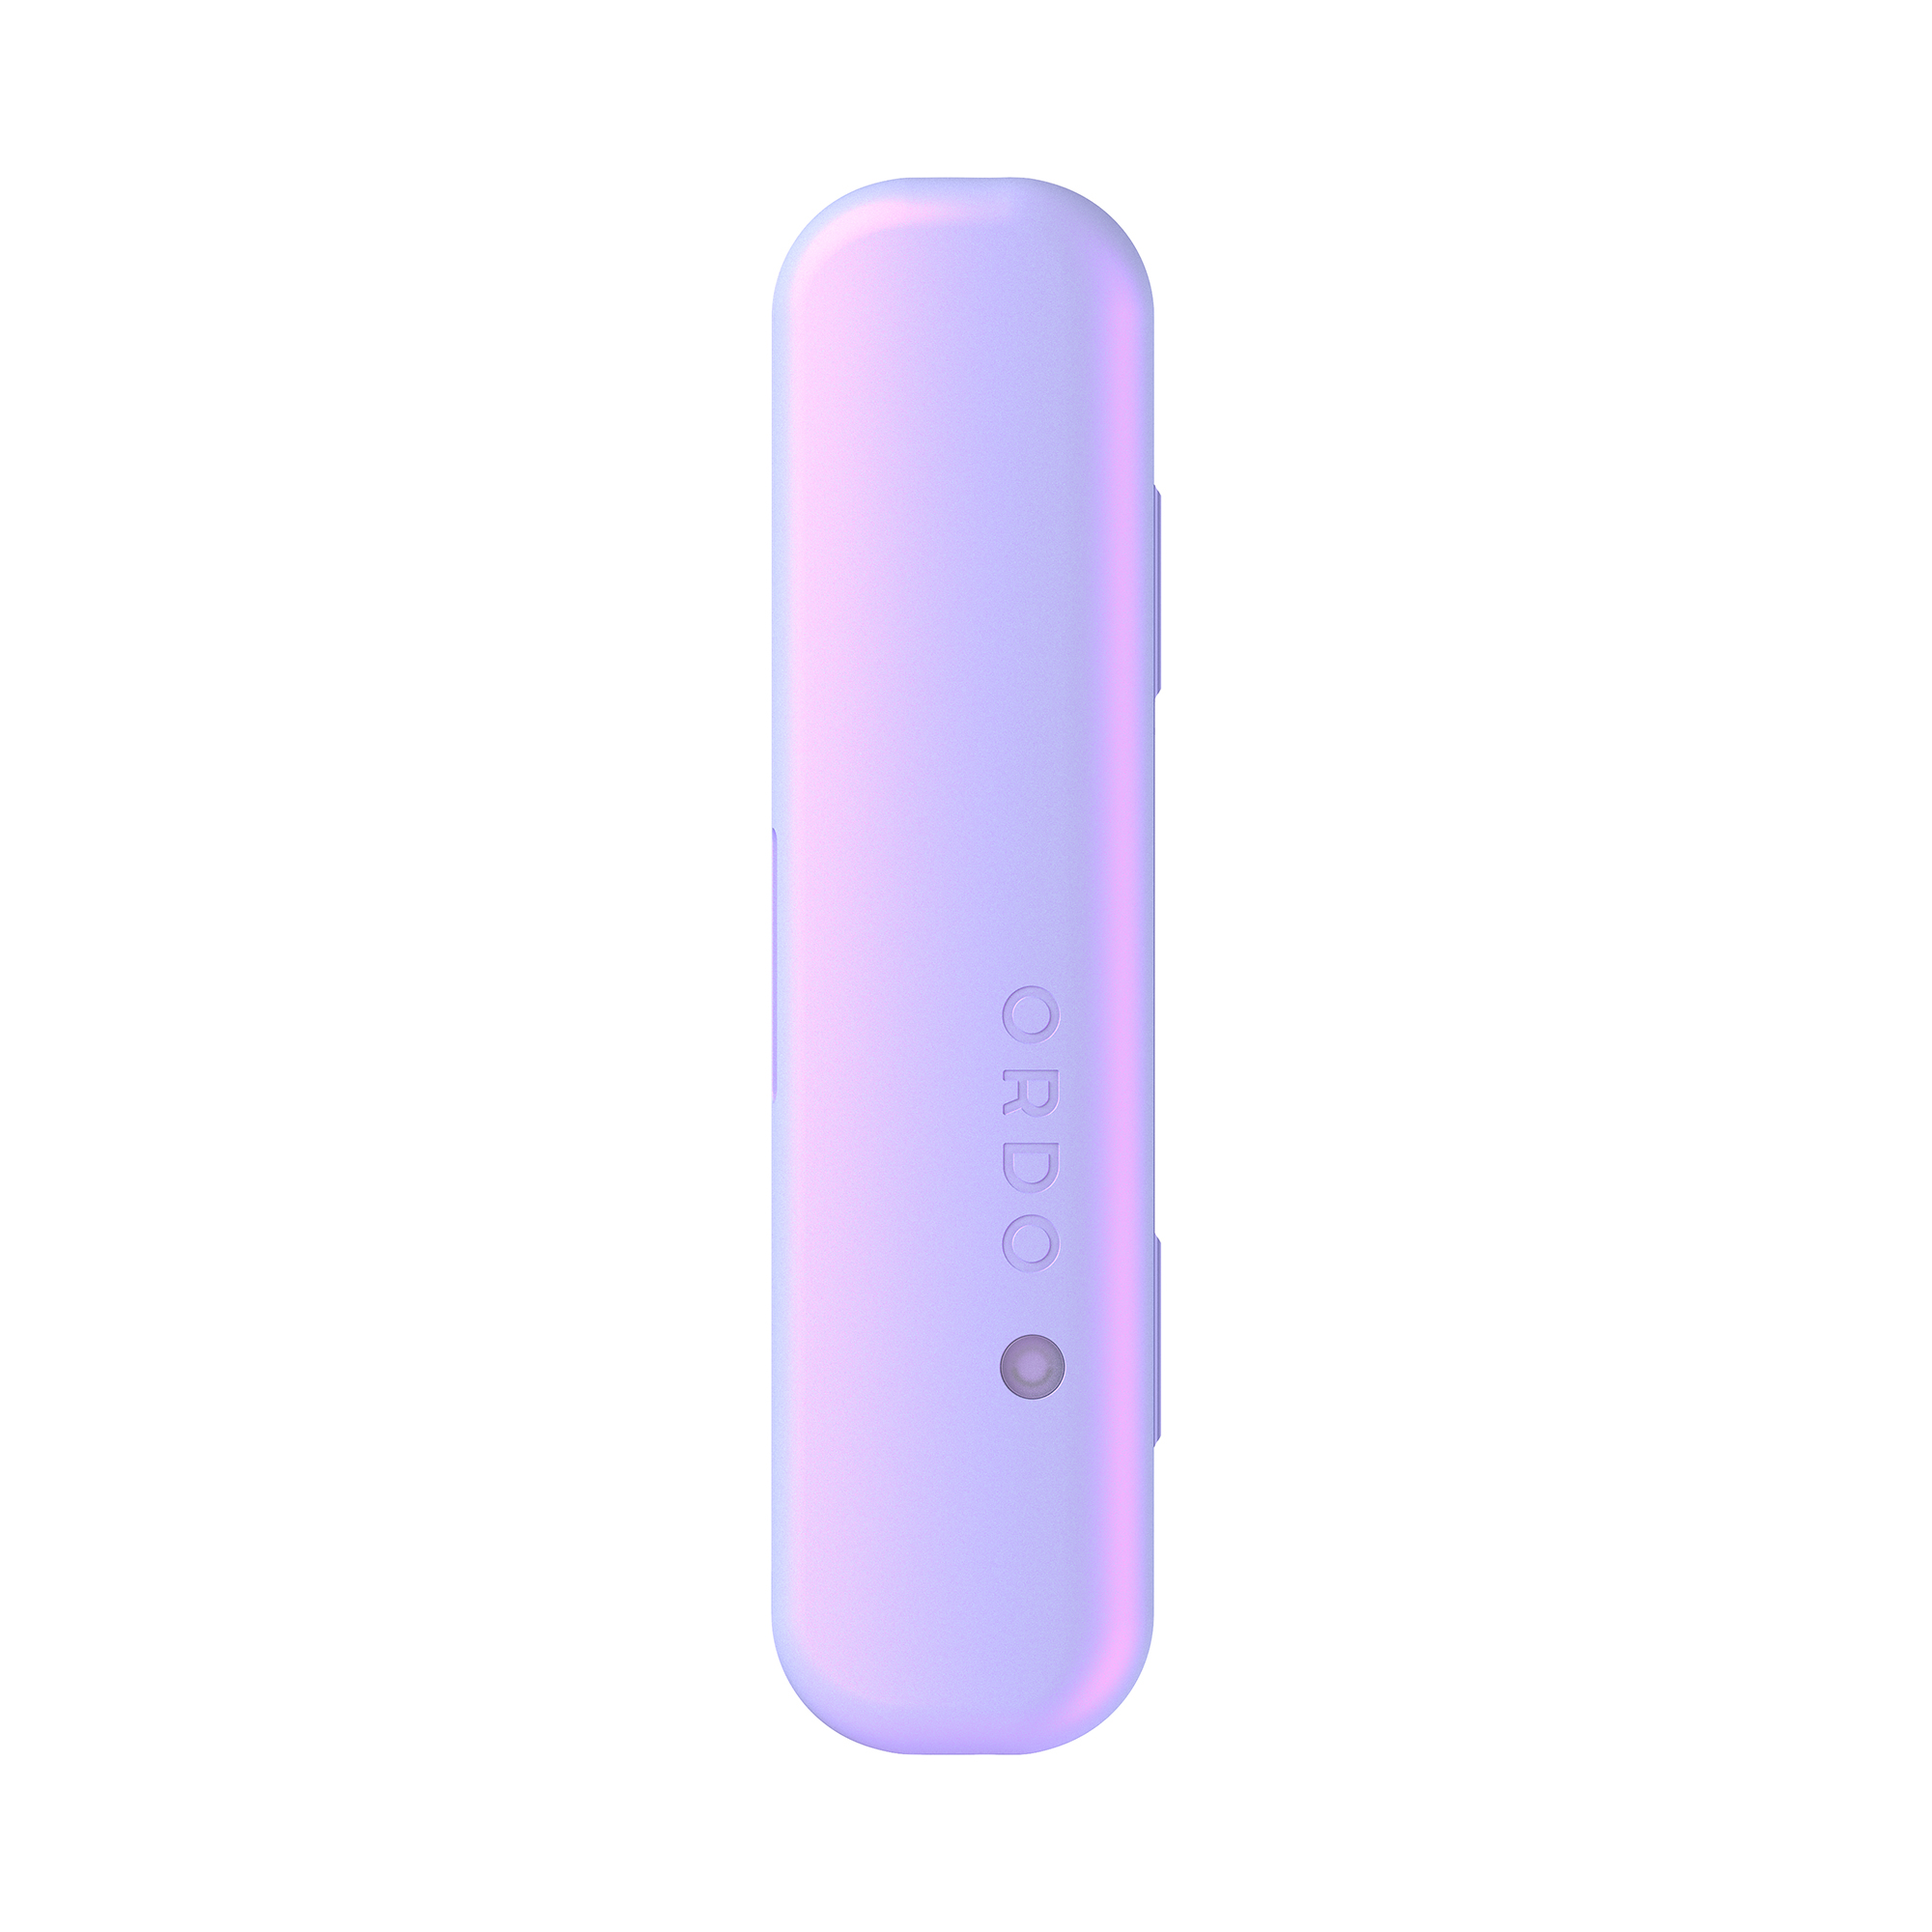 Зарядное устройство, футляр ORDO Sonic+ Charging Travel Case Pearl Violet зарядное устройство футляр ordo sonic charging travel case pearl violet